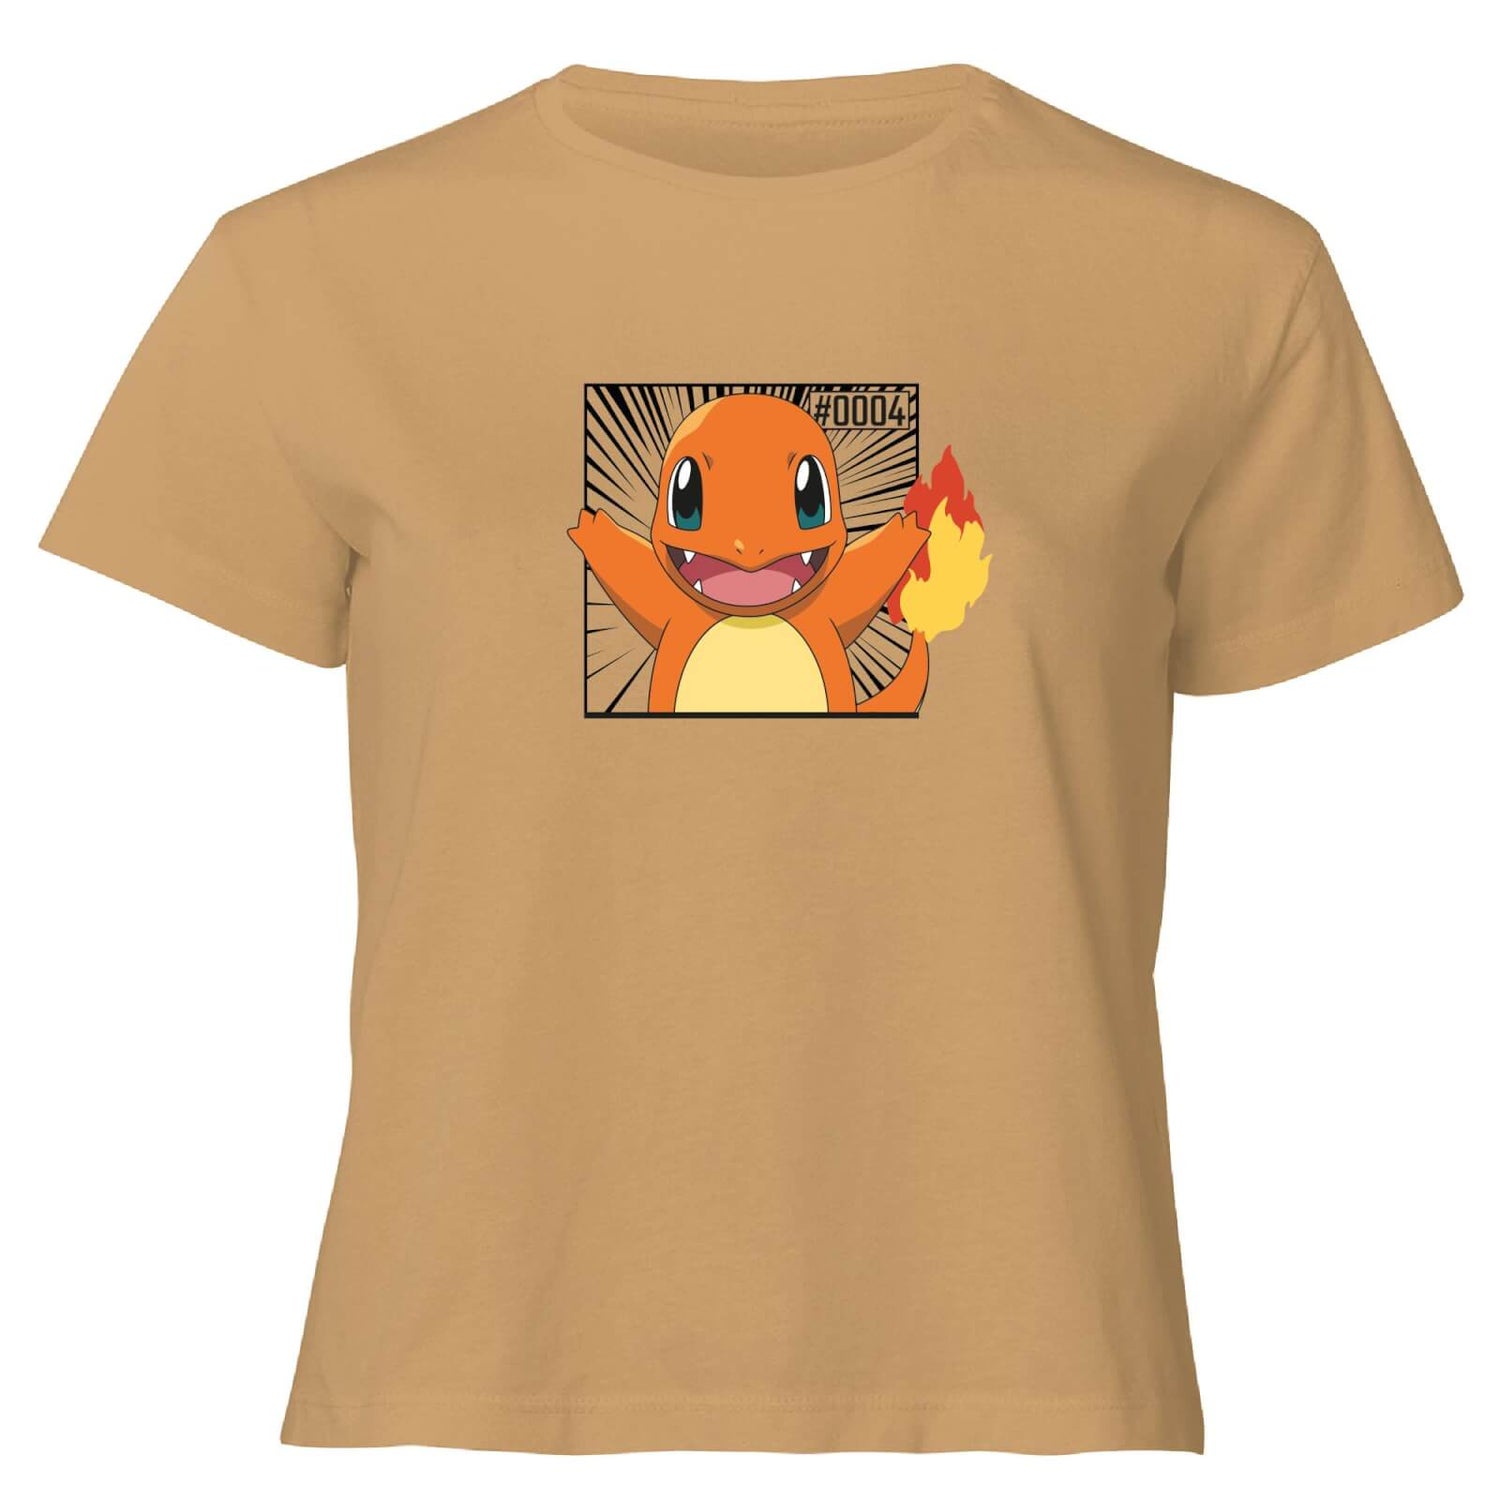 Pokémon Pokédex Charmander #0004 Women's Cropped T-Shirt - Tan